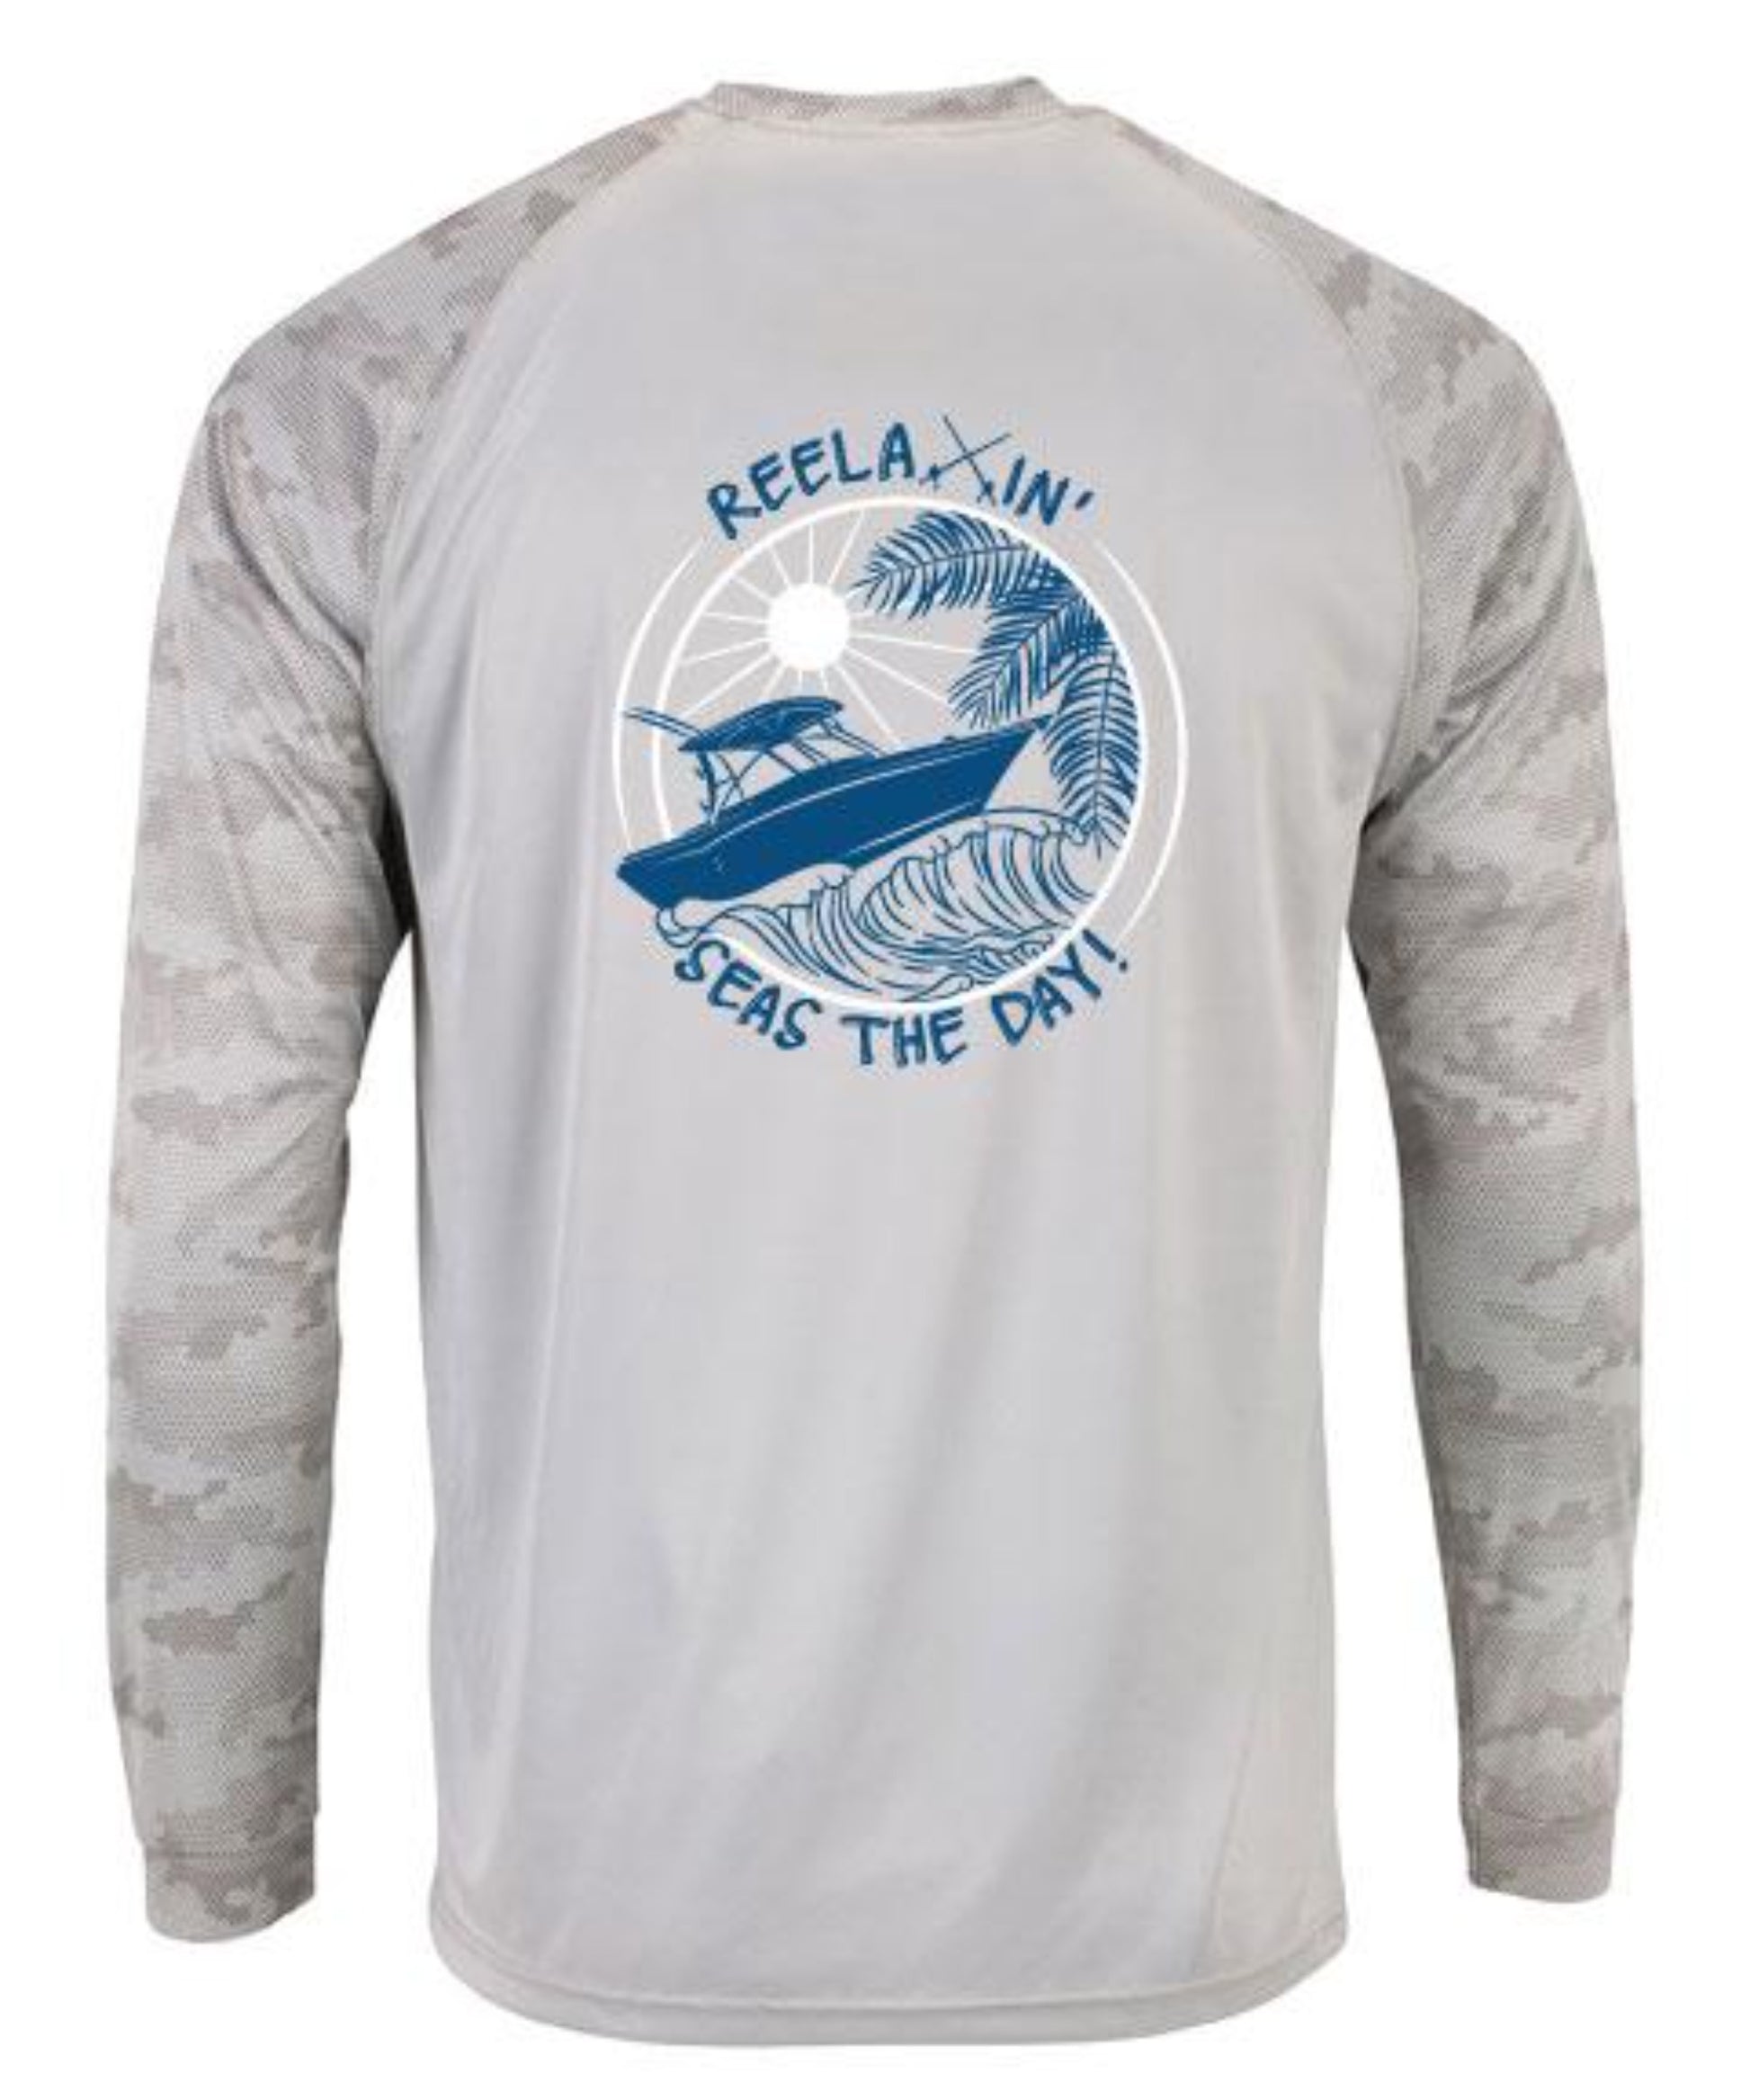 Lt. Gray Reelaxin' Digital Camo Performance Dry-Fit Fishing Long Sleeve Shirts, 50+ UPF Sun Protection  - Reel Fishy Apparel